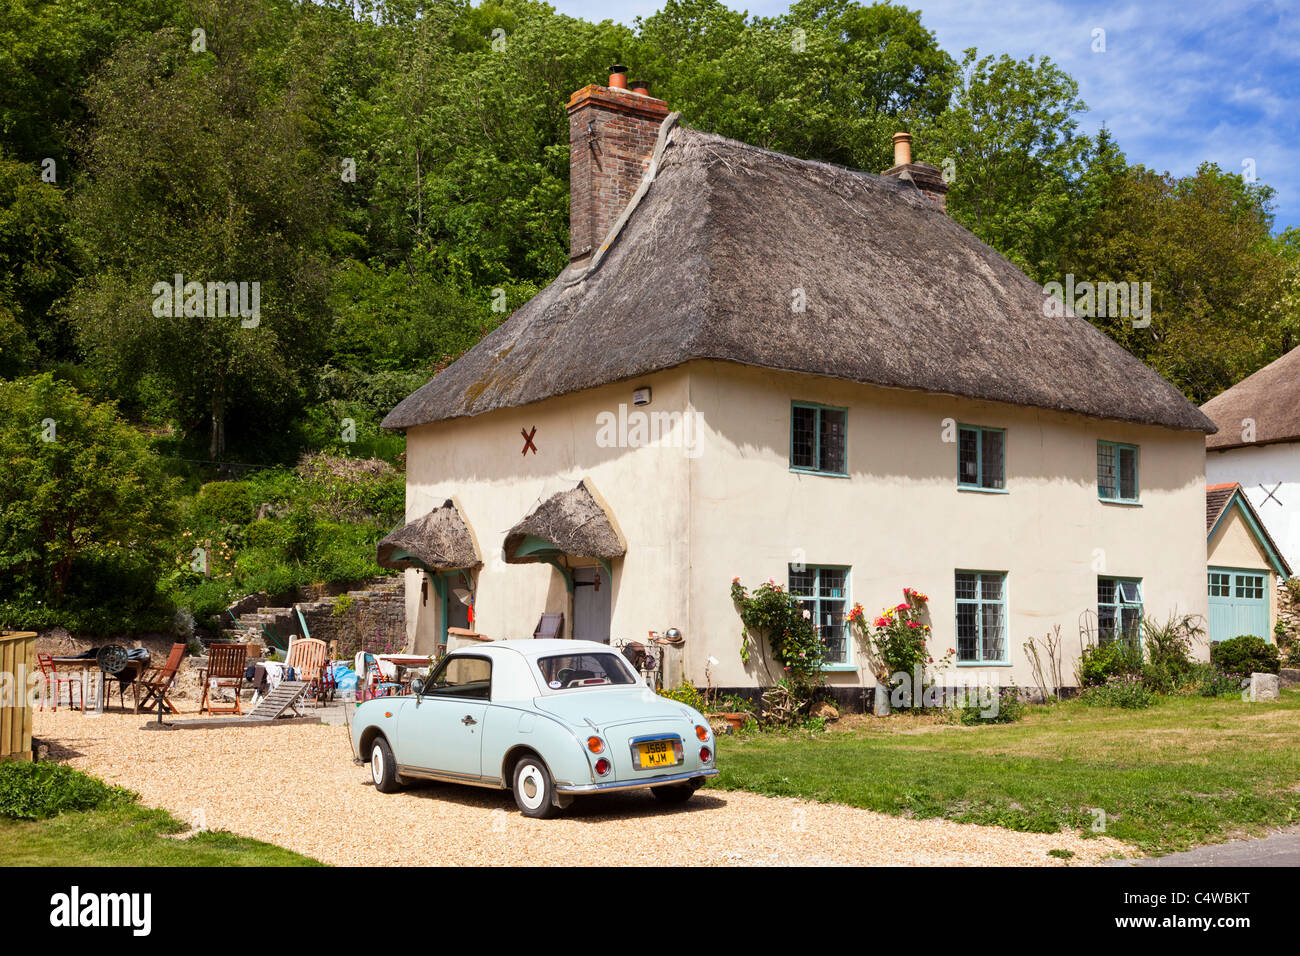 Thatched house uk cottage and vintage car, Milton Abbas, Dorset, England, UK Stock Photo